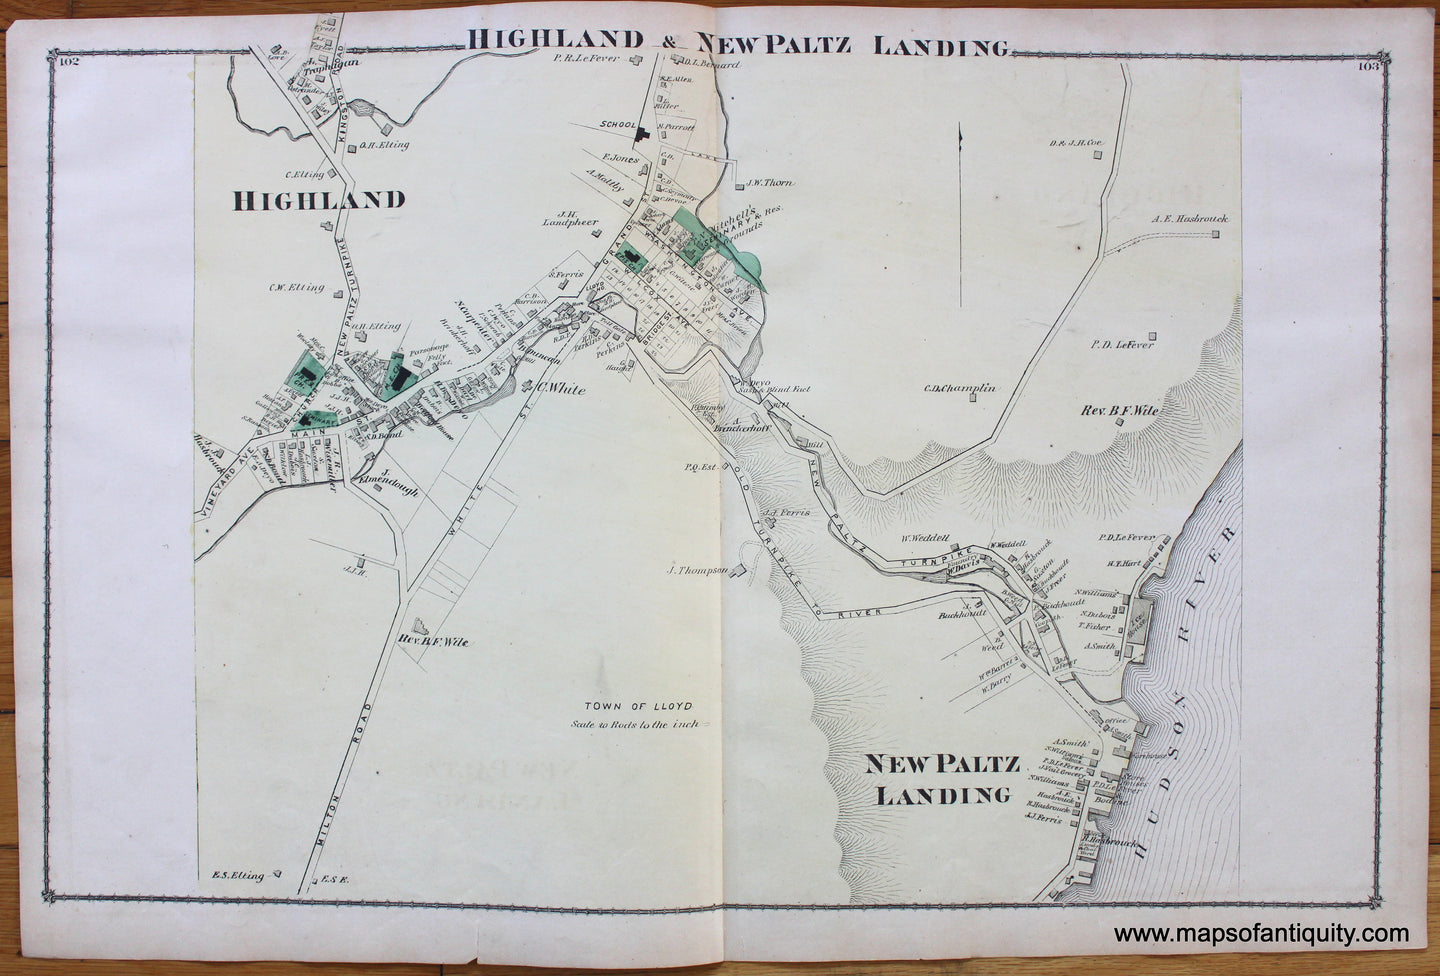 Highland-New-Paltz-Landing-Ellmore-Corners-Ohioville-New-Salem-Rifton-Glen-Dashville-Centreville-Lloyd-P.O.-Put-Corners-Ulster-County-New-York-1875-Beers-1870s-1800s-19th-century-antique-Maps-of-Antiquity